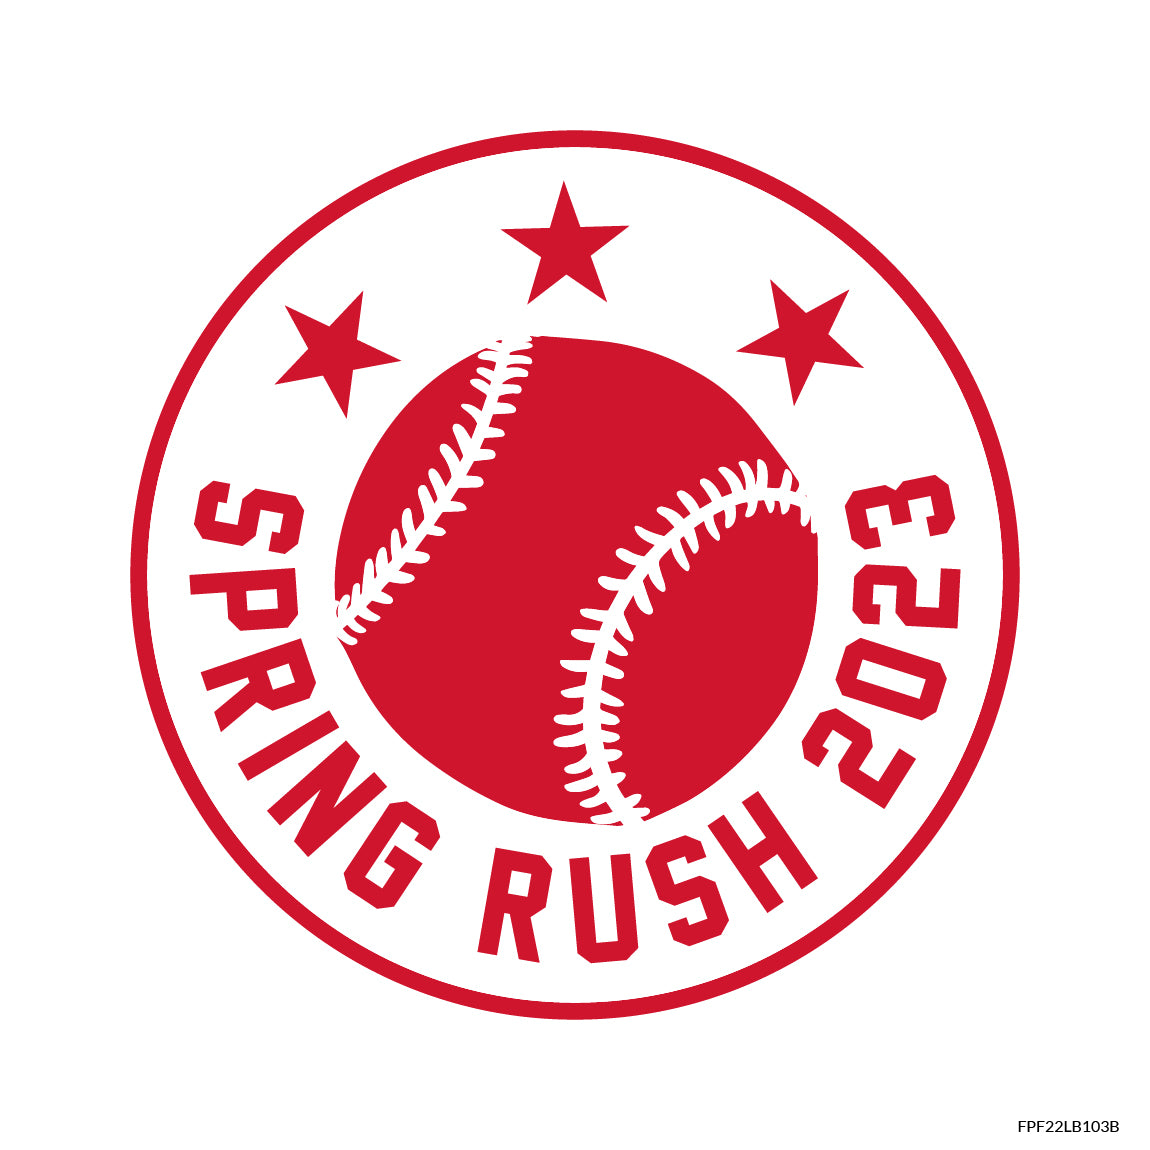 All-Star Baseball